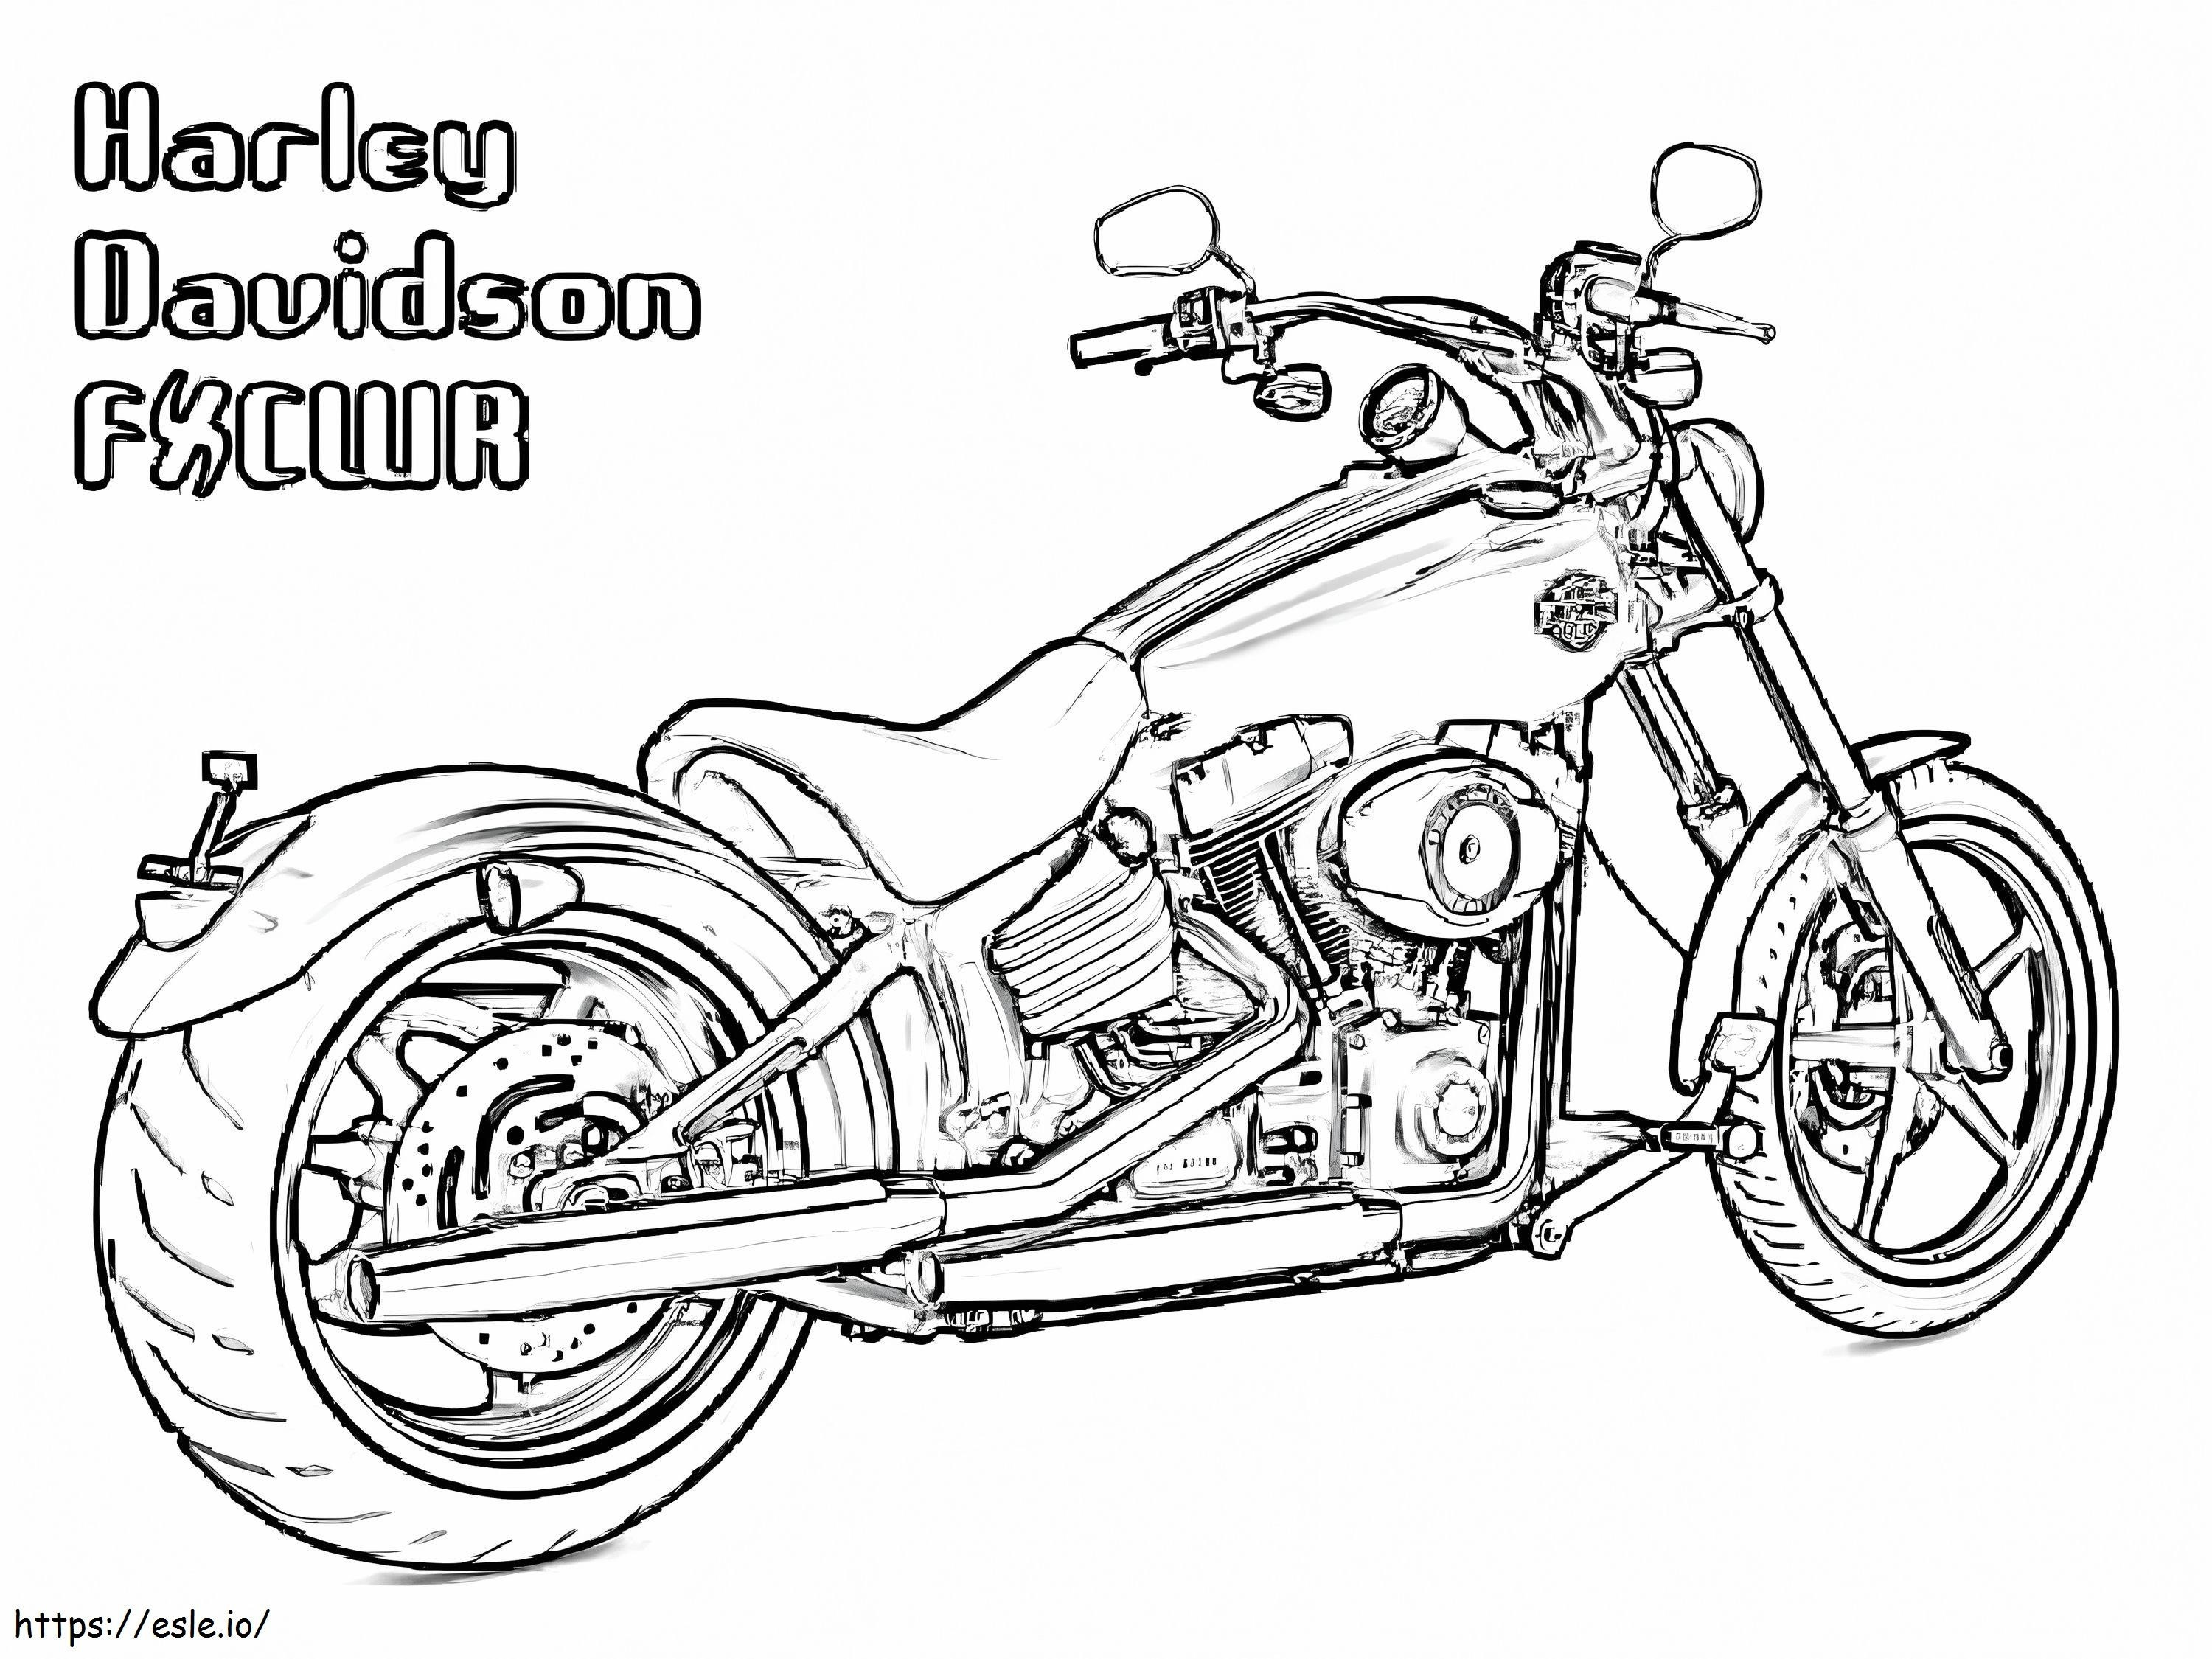 Harley Davidson grátis para colorir